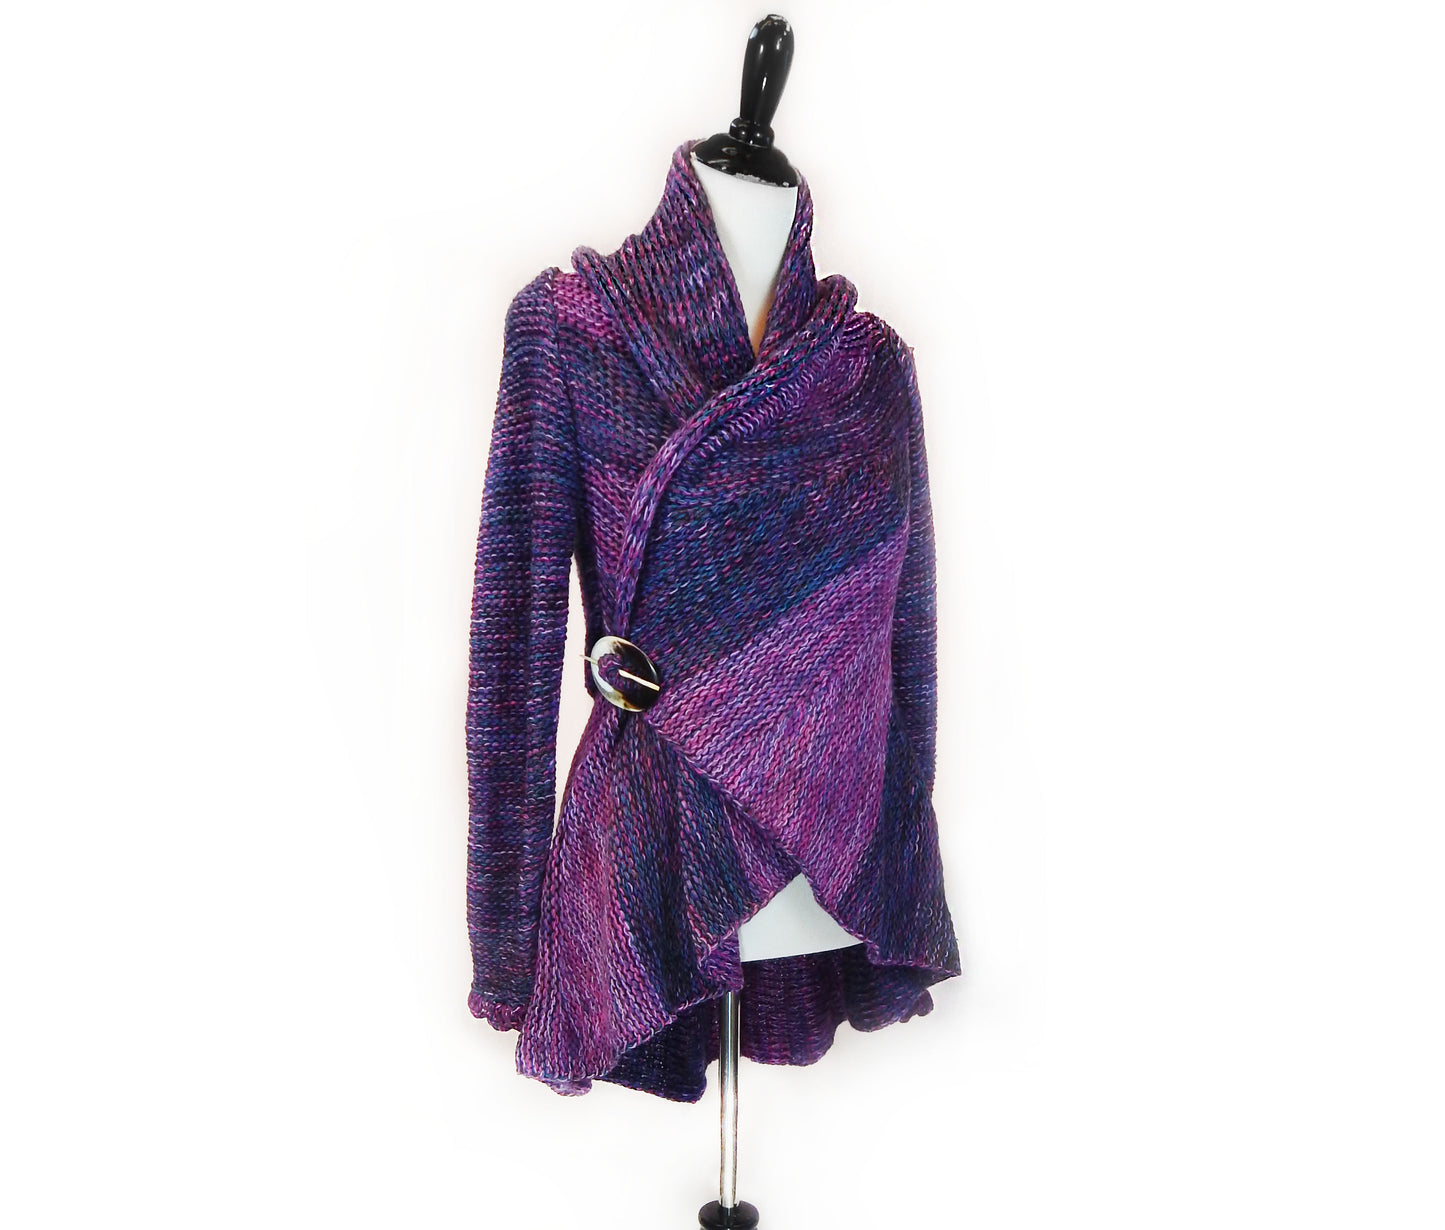 Fine Alpaca Wool Tailored Knit Peacoat Cardigan Sweater Open Versatile Stylish Elegant Fitted Wrap Crochet Sleeve Purple Violet Shades